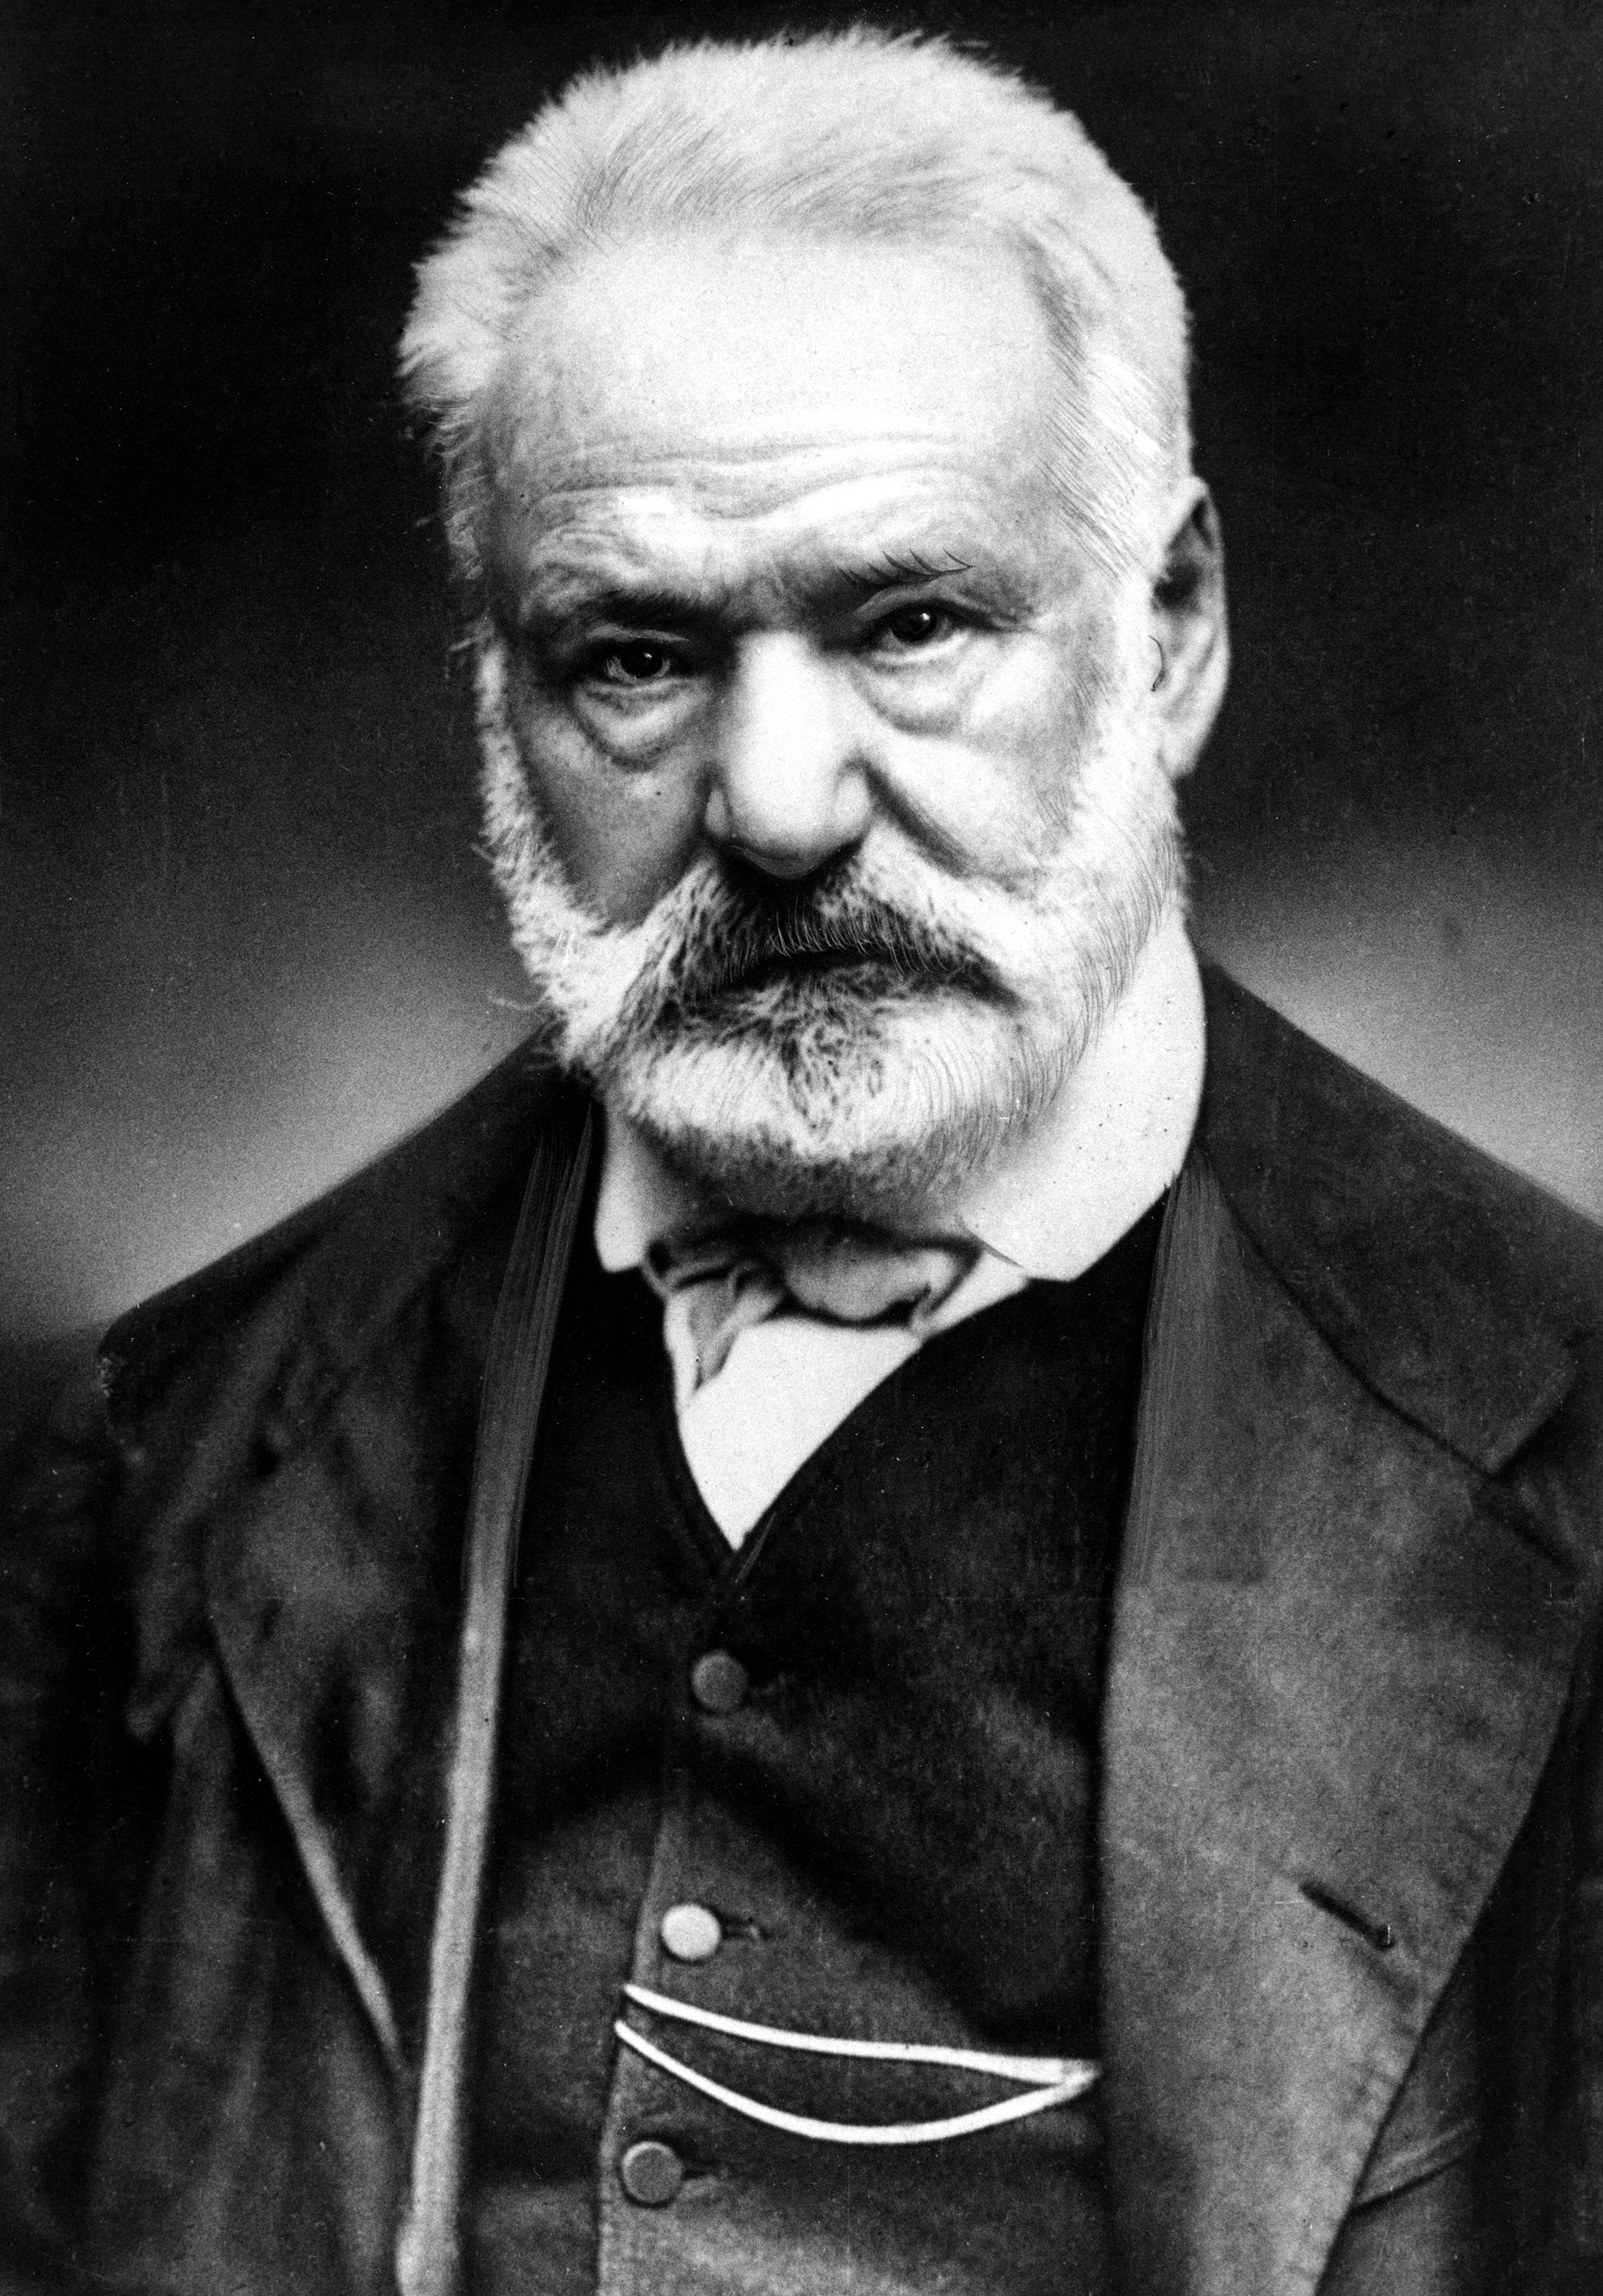 Victor Hugo Mizerabilii Pdf